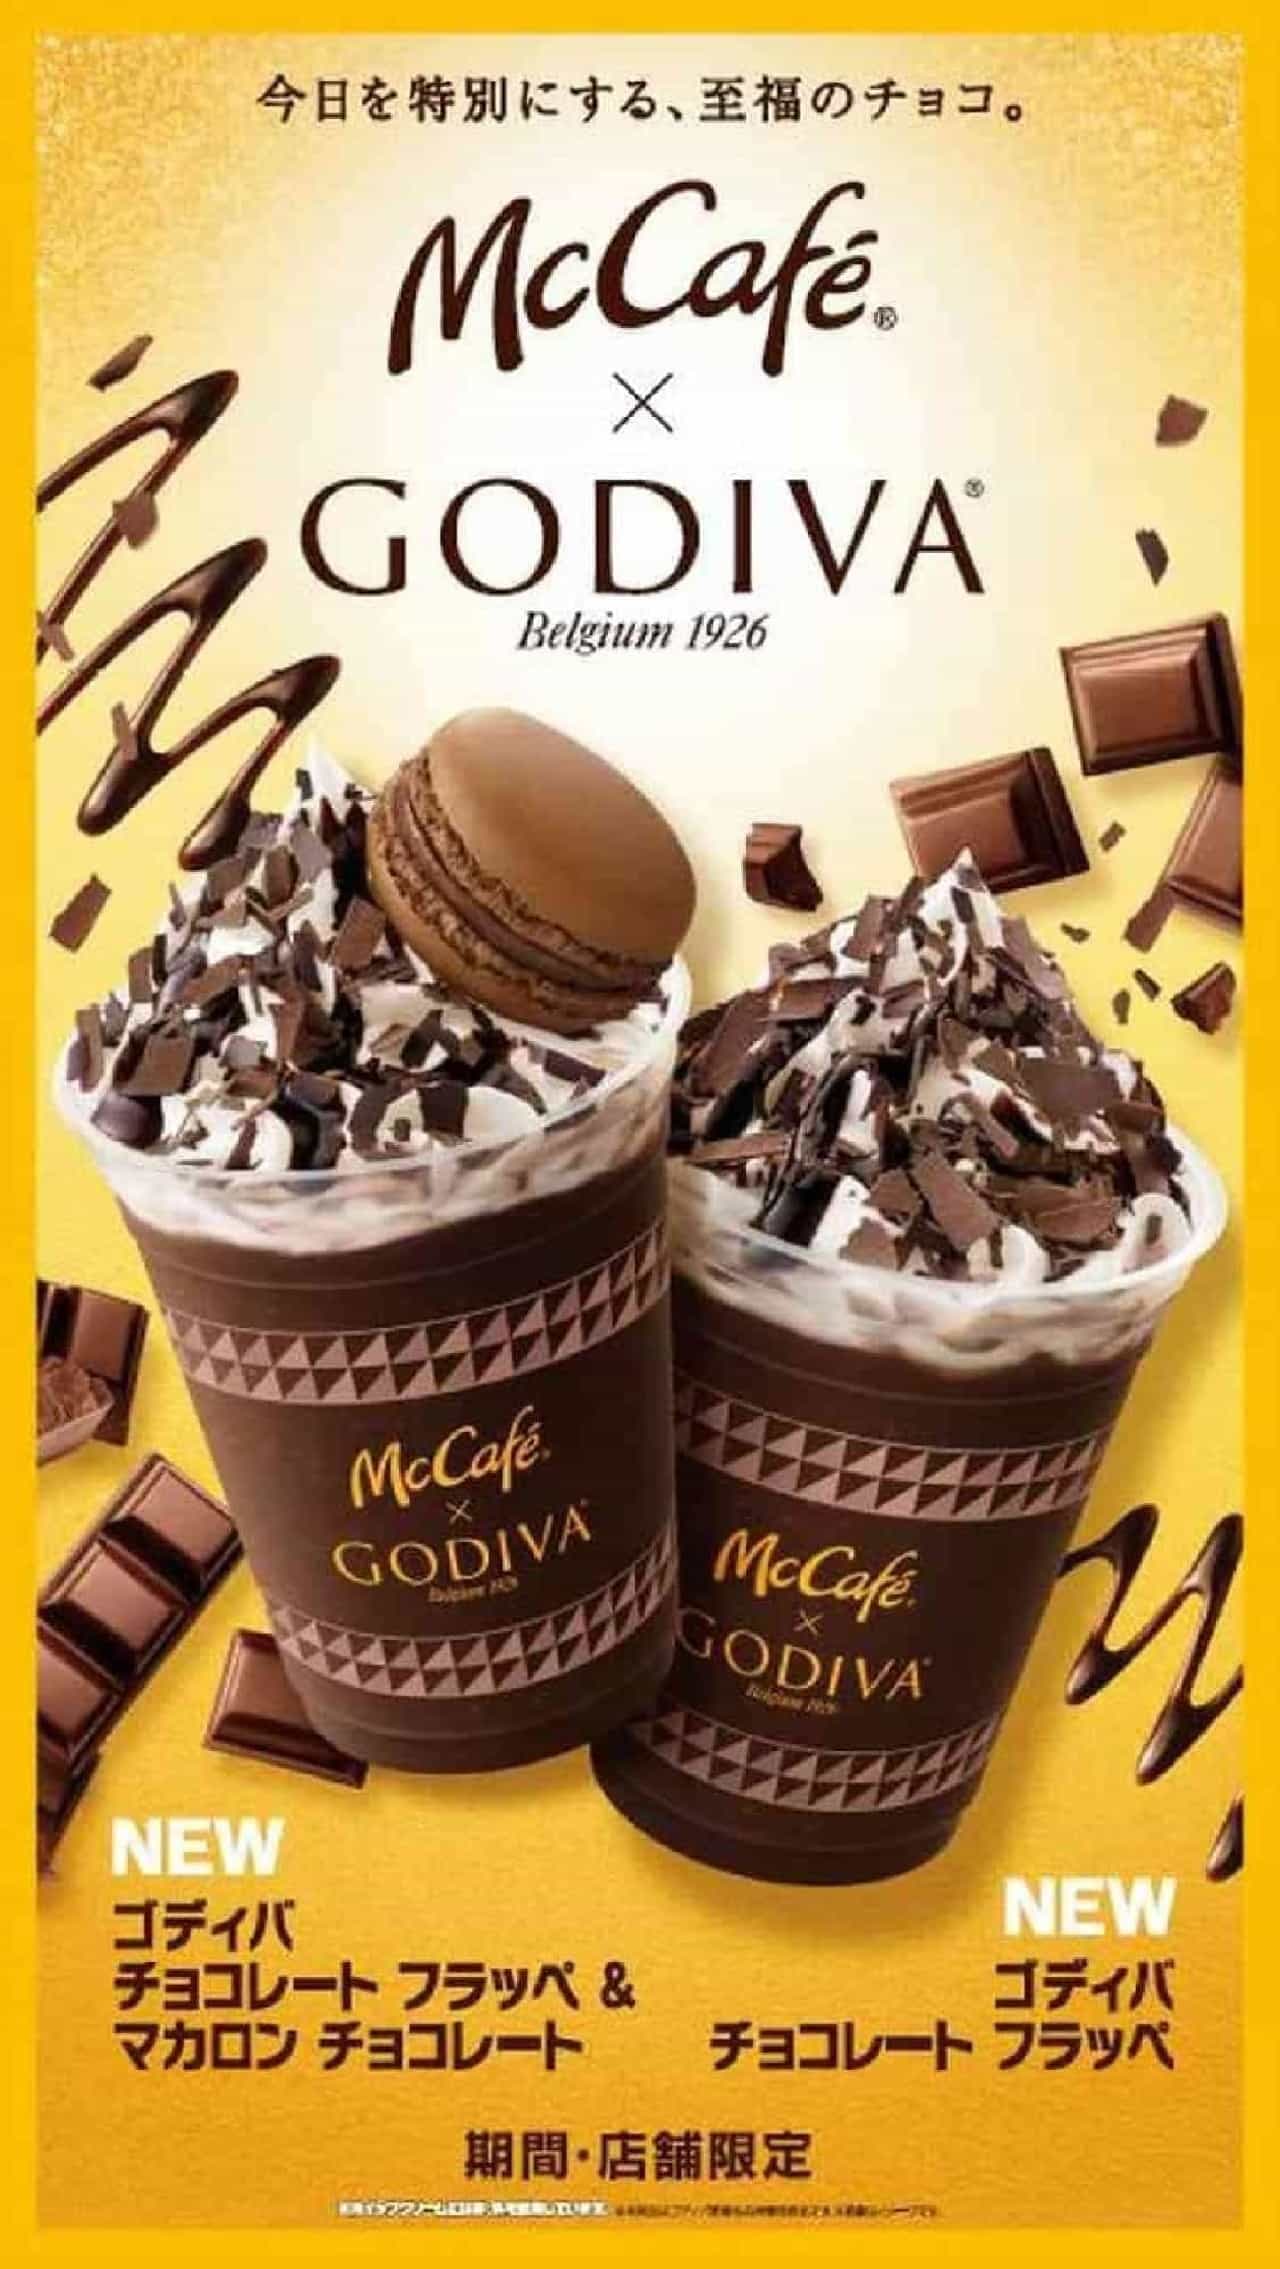 Mac Cafe "Godiva Chocolate Frappe" and "Godiva Chocolate Frappe & Macaroon Chocolate".